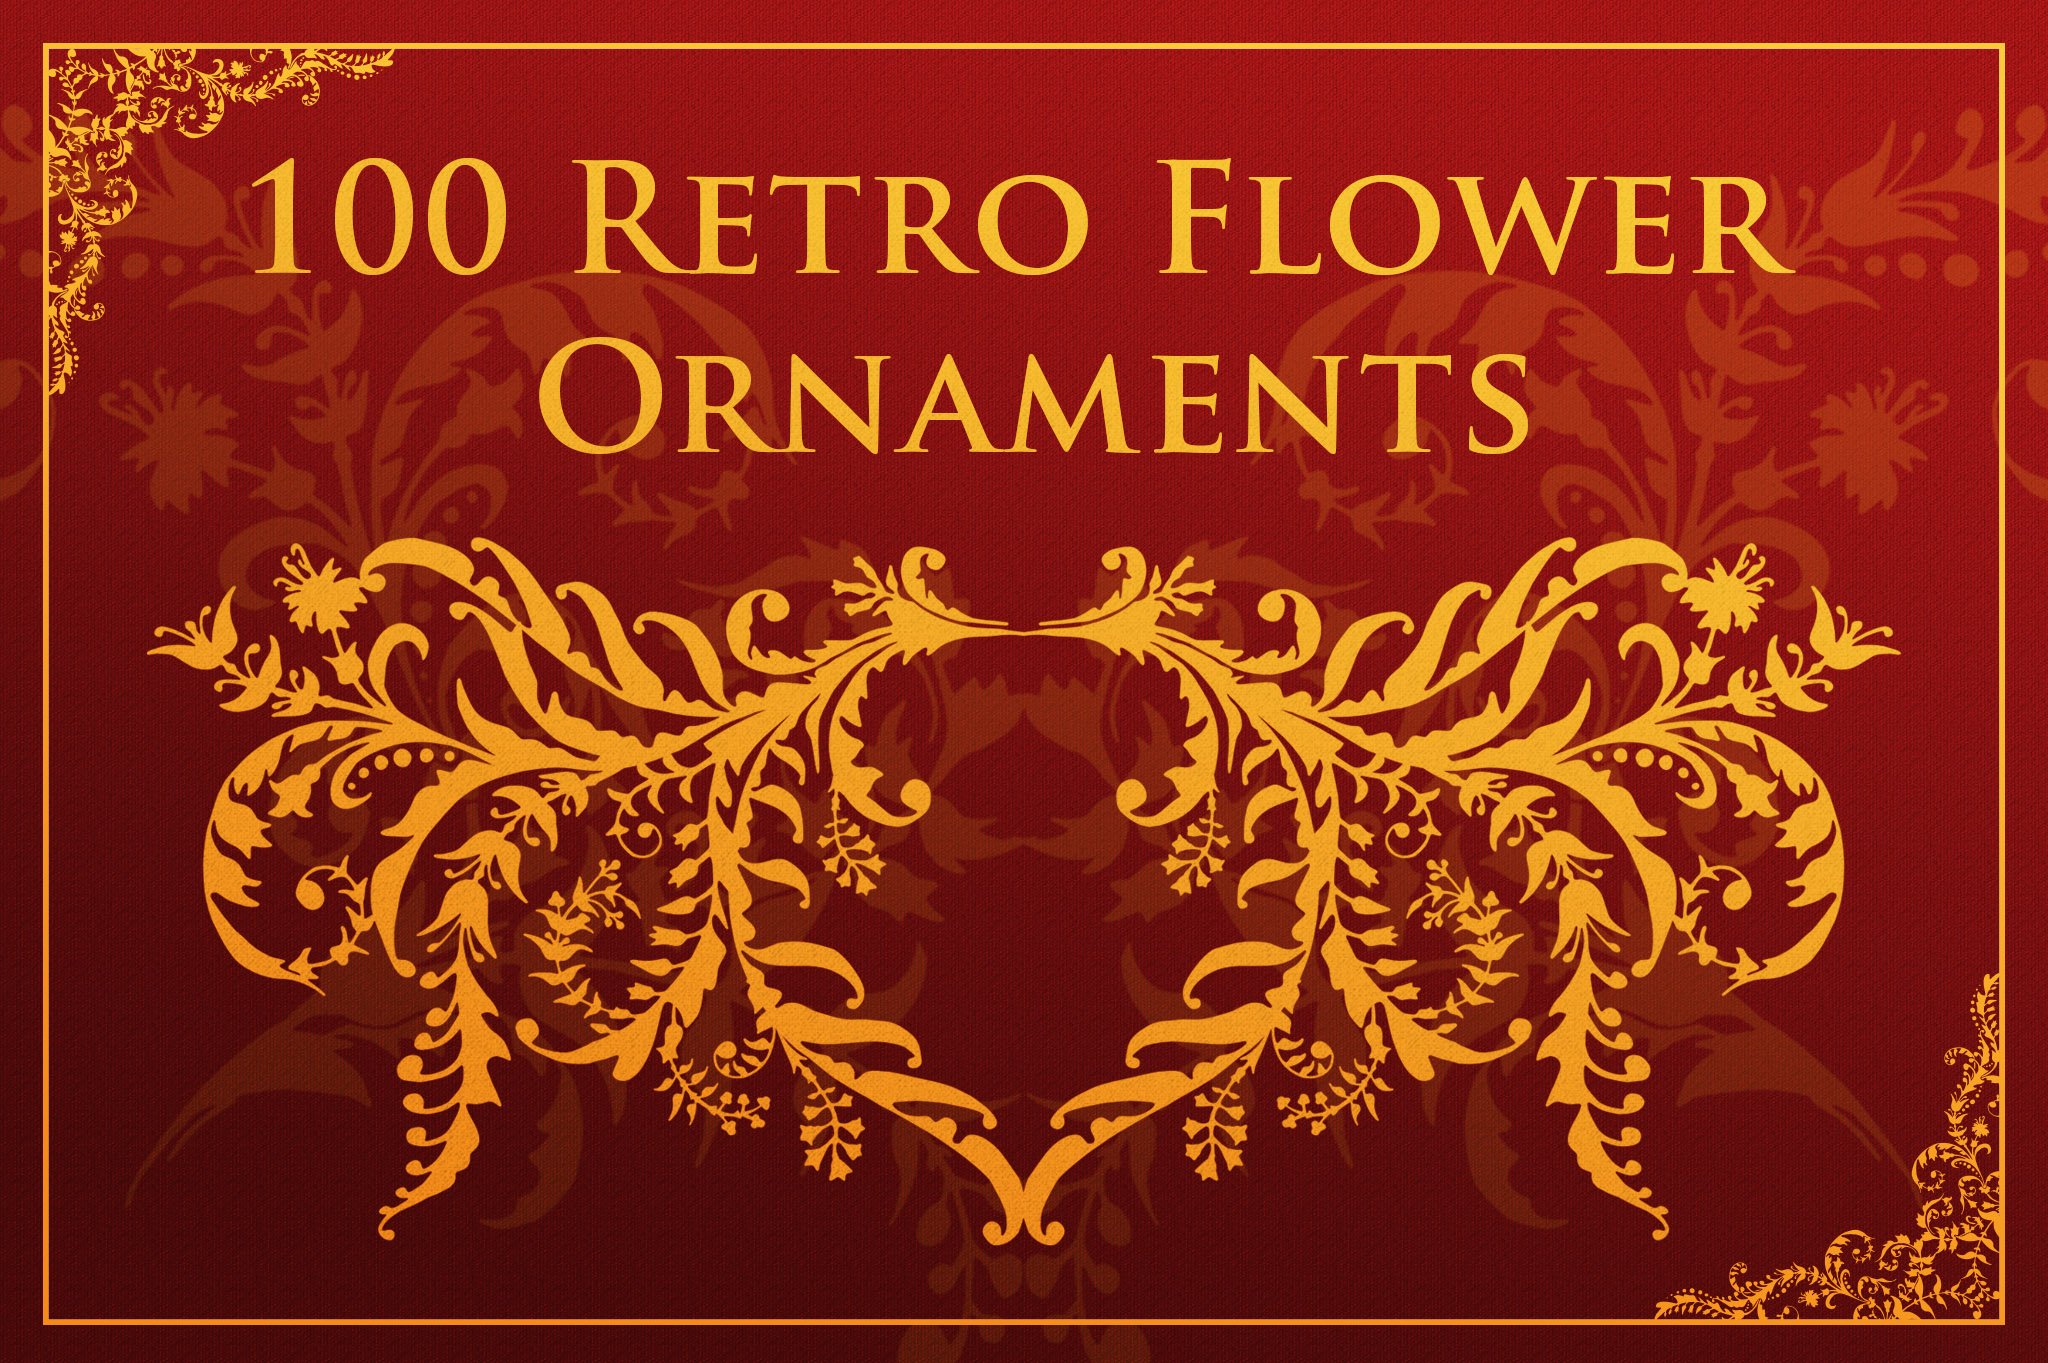 100 retro flower ornaments.